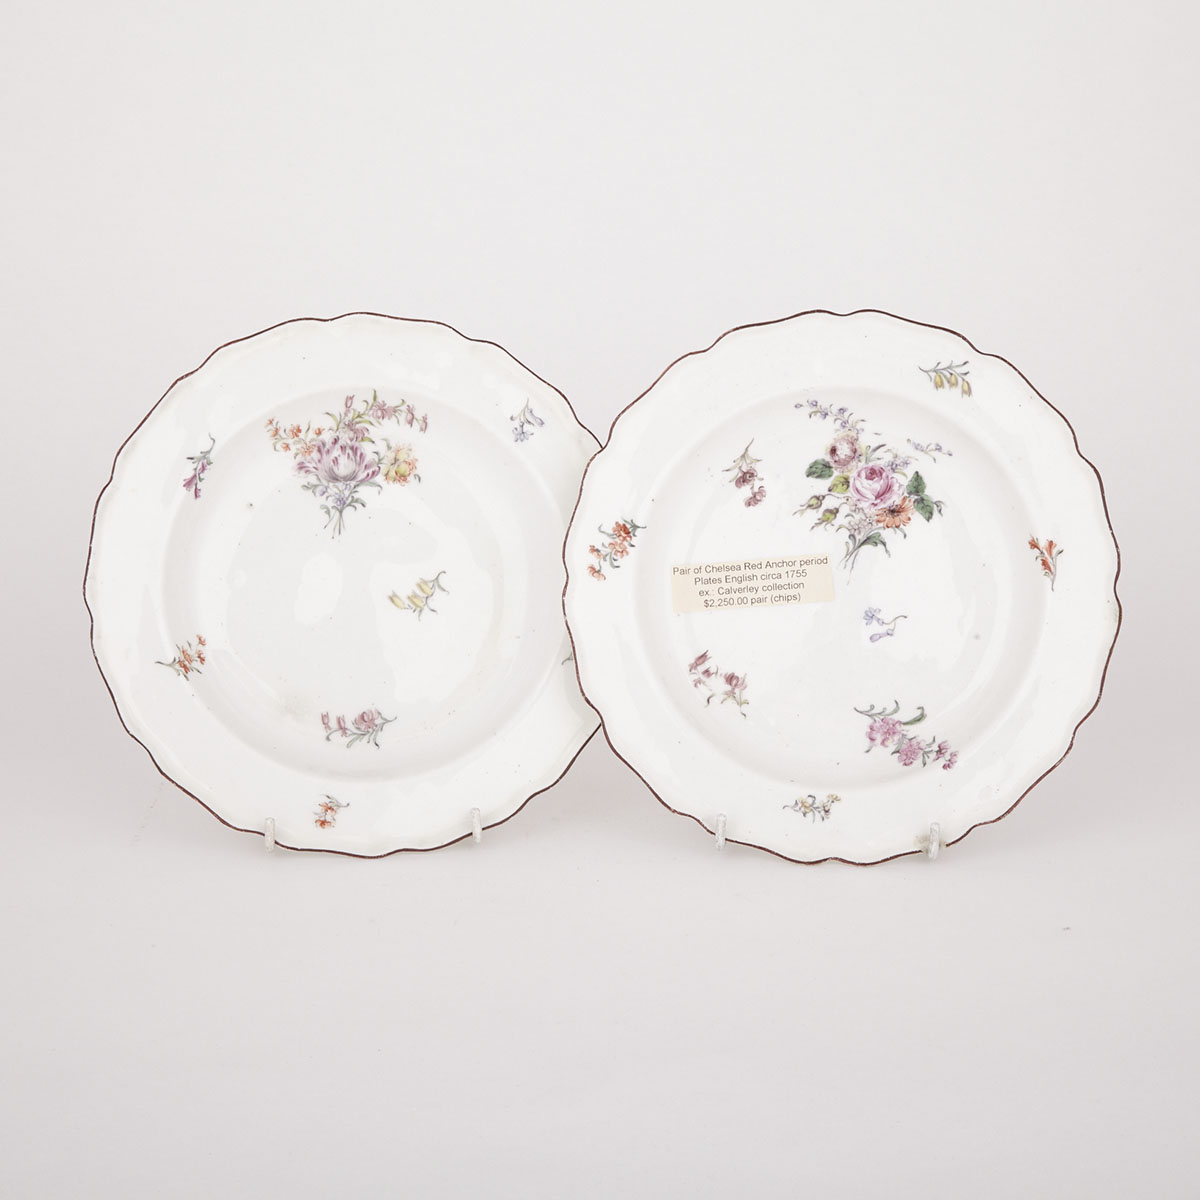 Pair of Chelsea Flower-Painted Plates, c.1755